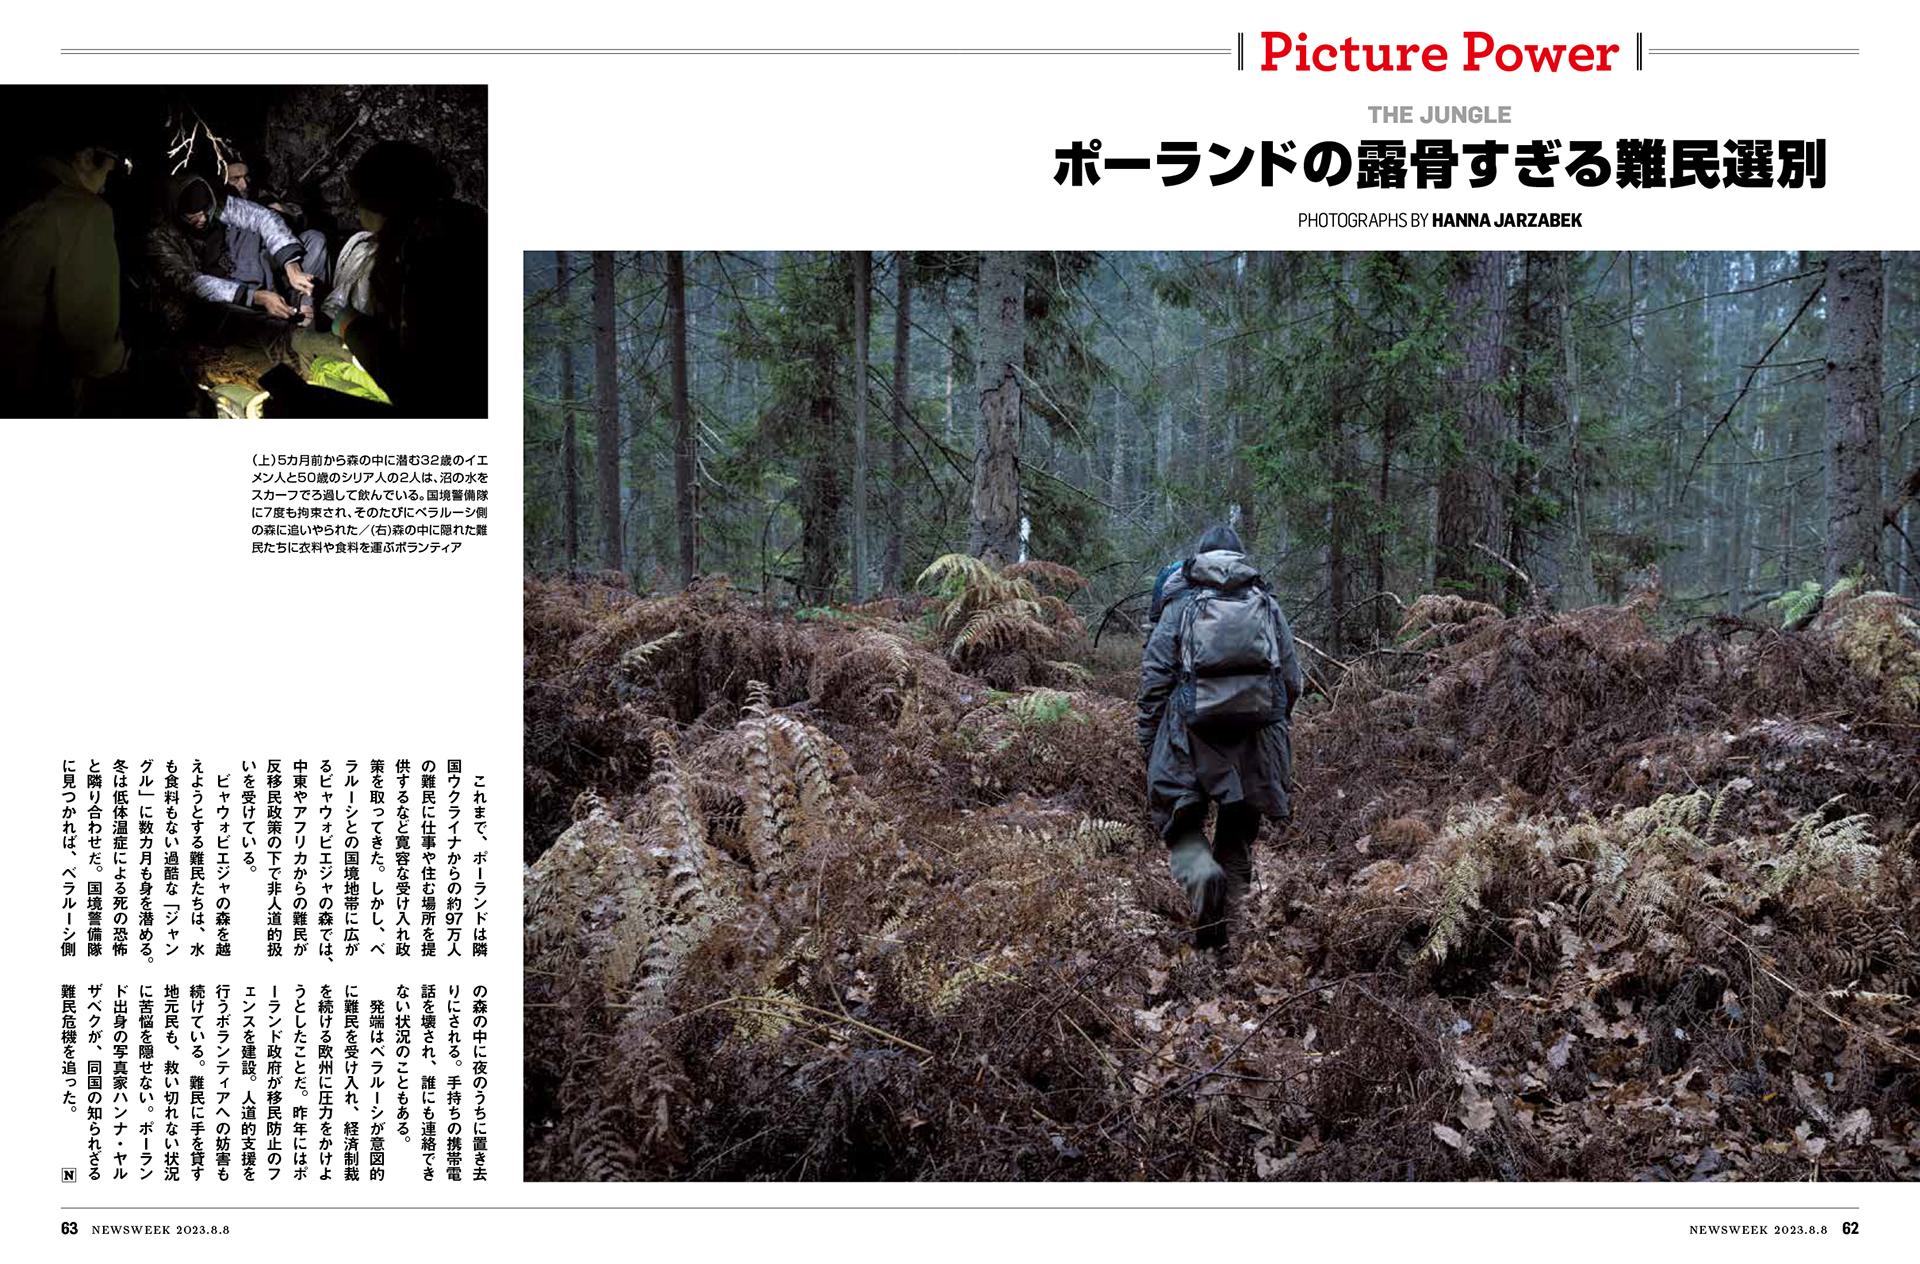 Art and Documentary Photography - Loading NewsweekJapan-1.jpg